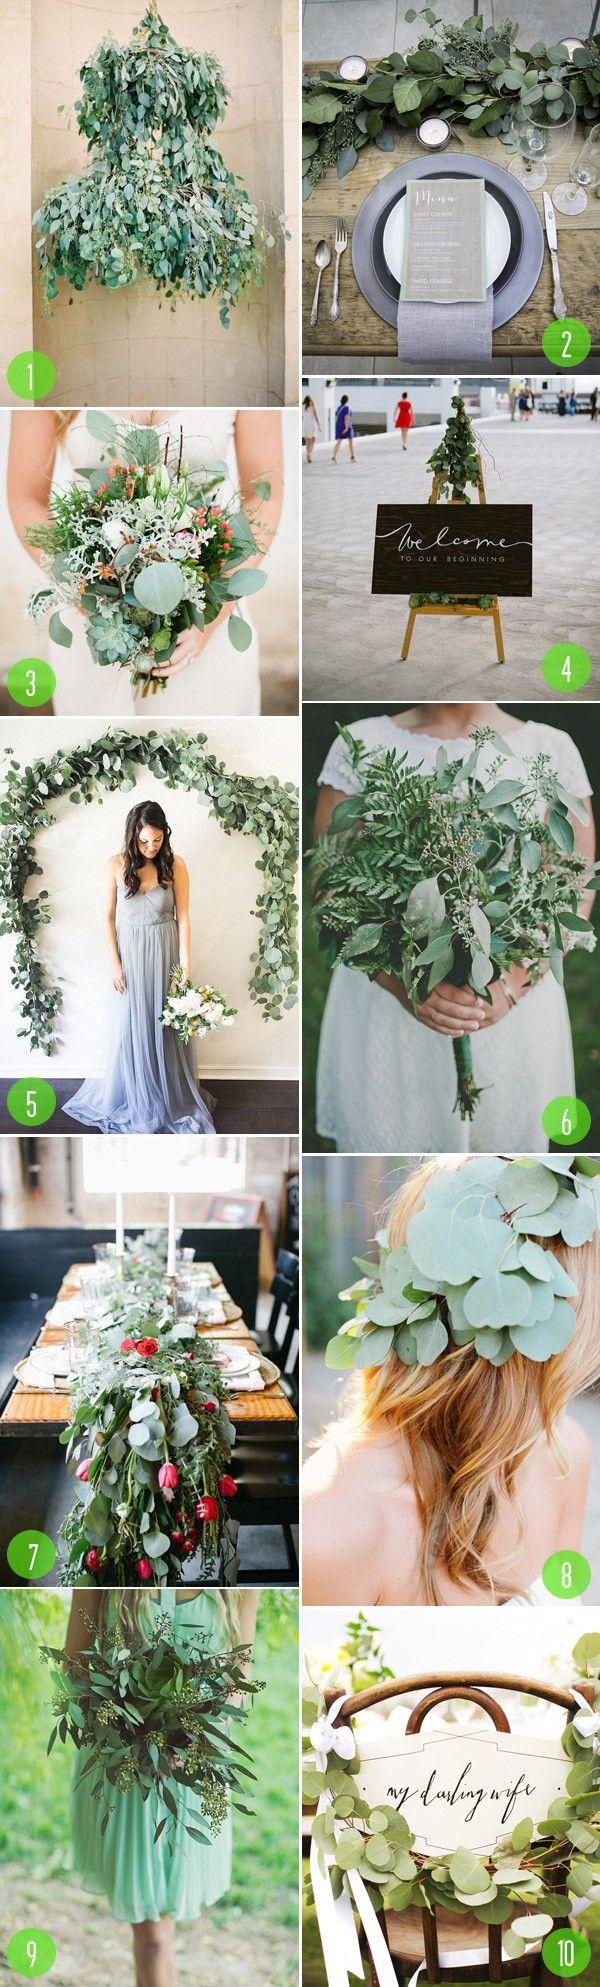 Wedding - Top 10: Eucalyptus Details